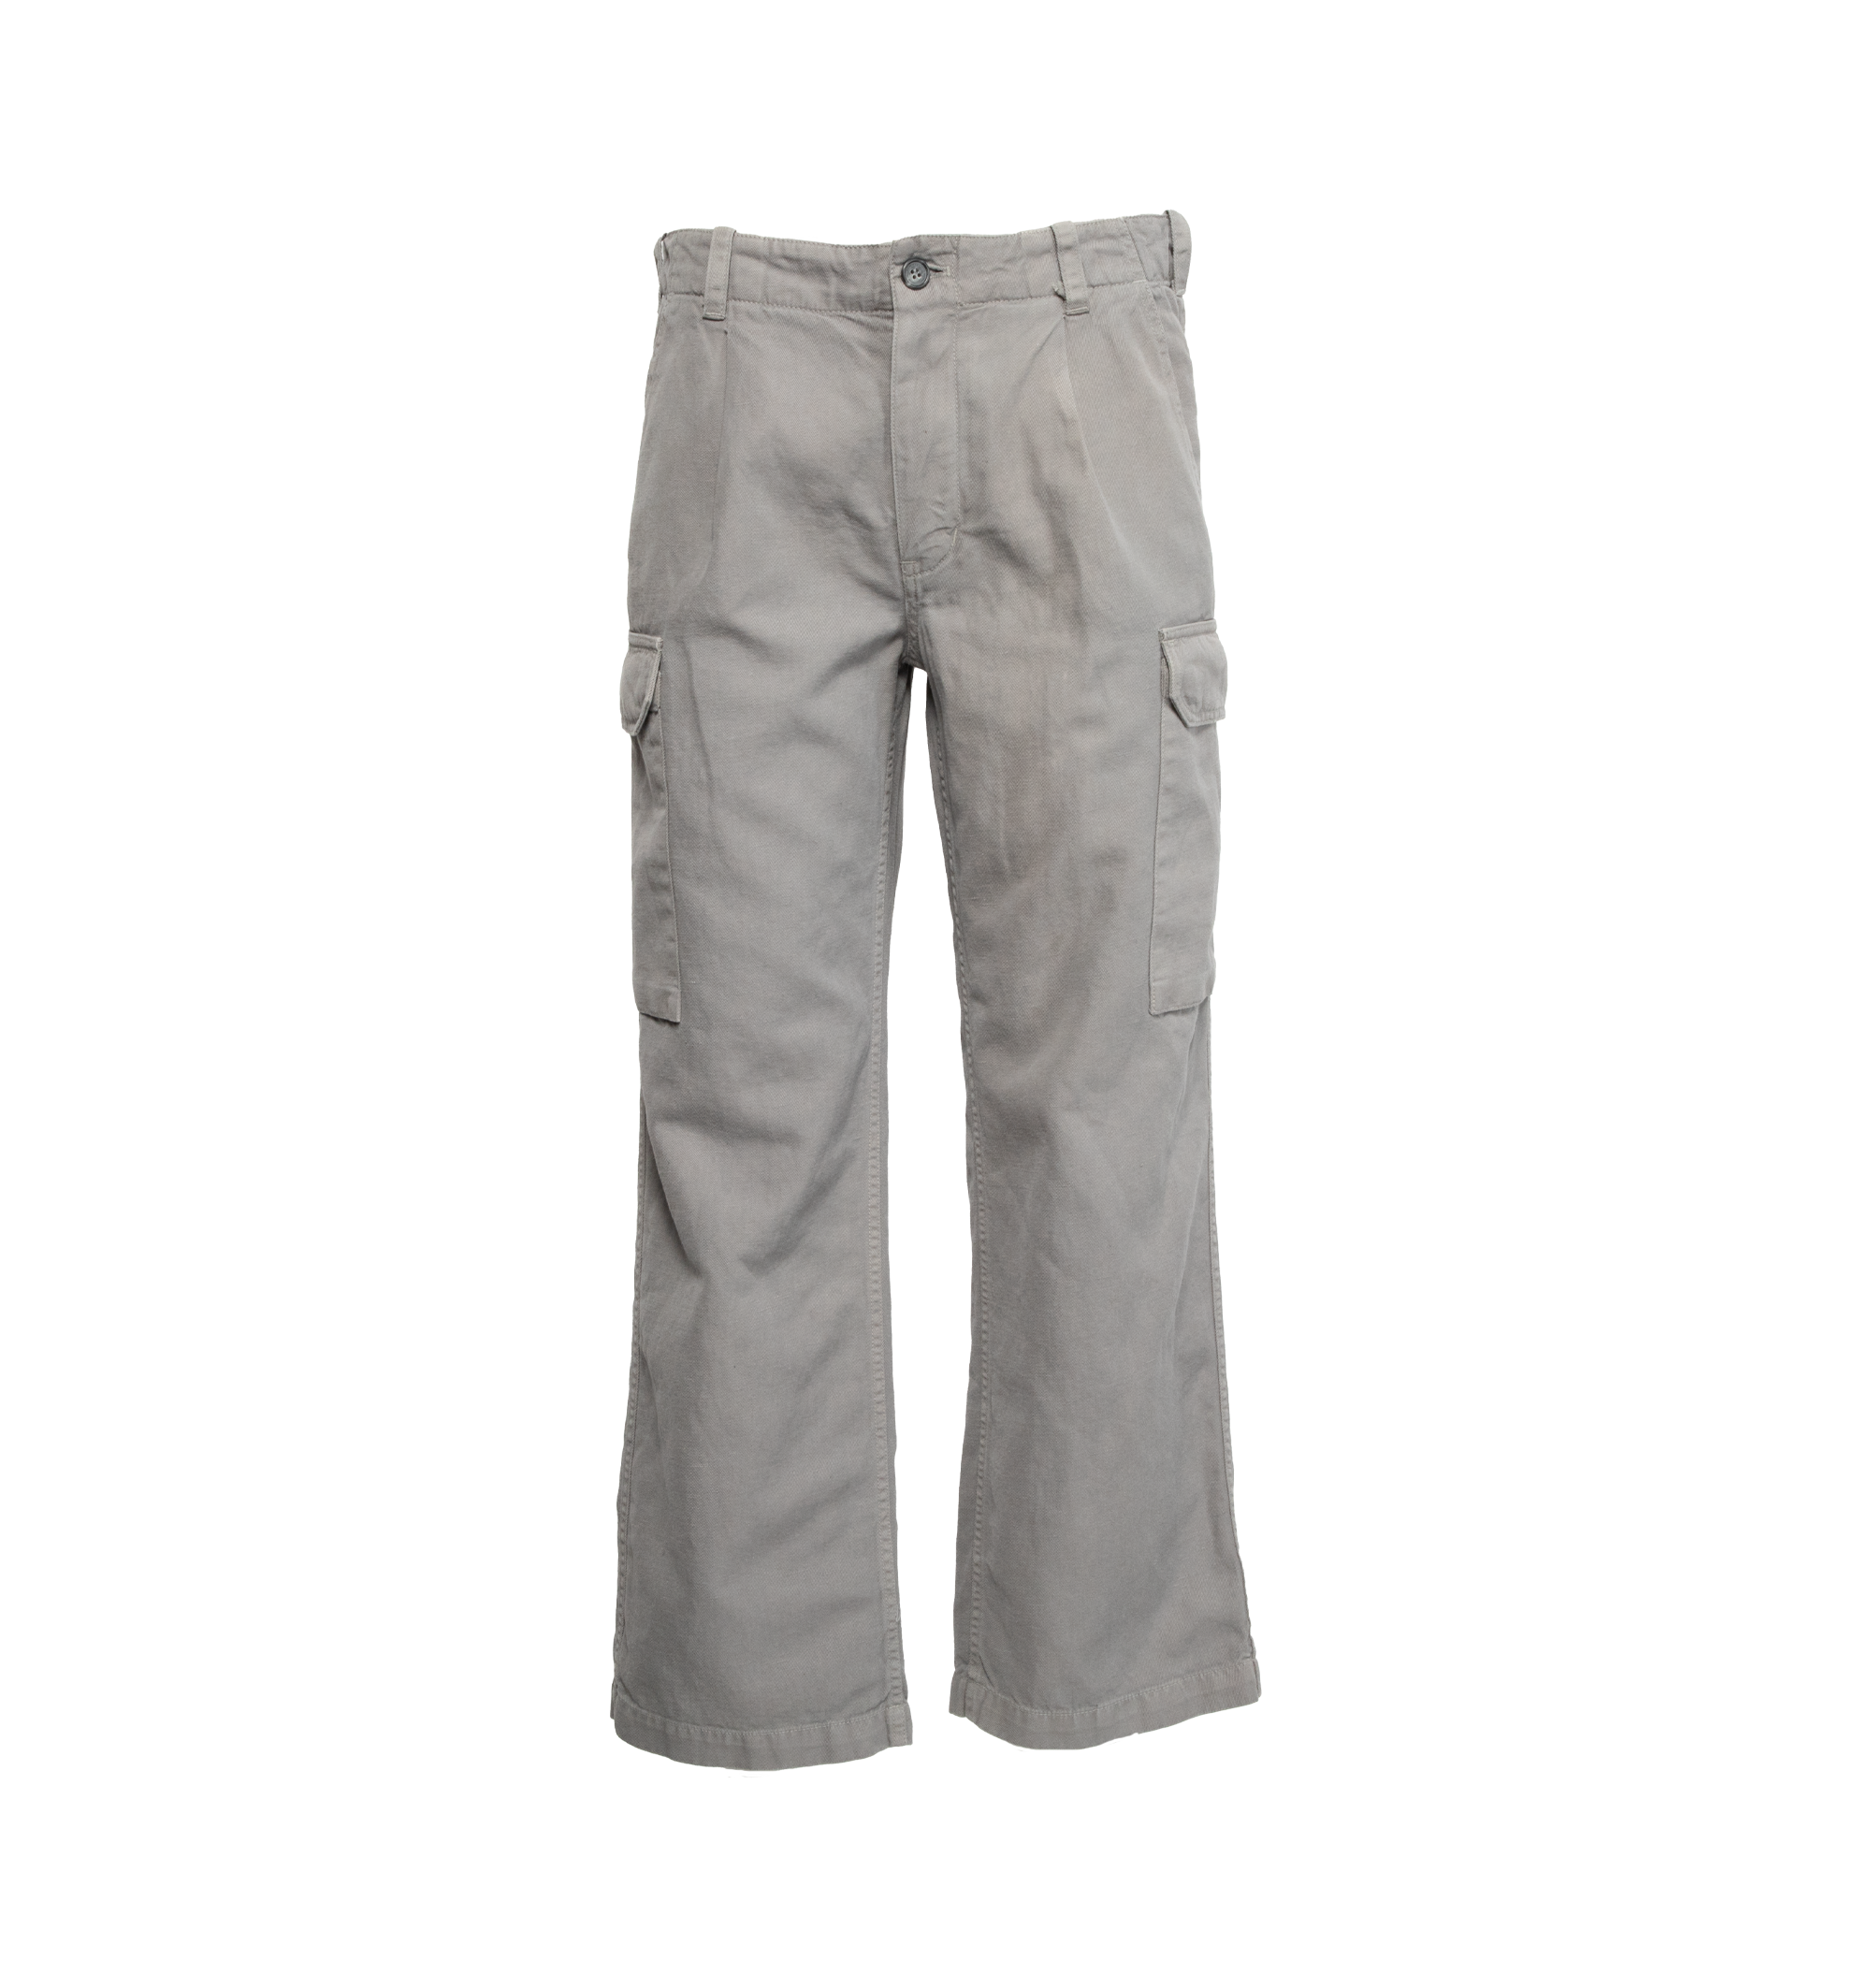 Buy SweatyRocks Women's High Waist Cargo Jeans Flap Pocket Wide Leg Denim  Pants, Pure Black, X-Small at Amazon.in